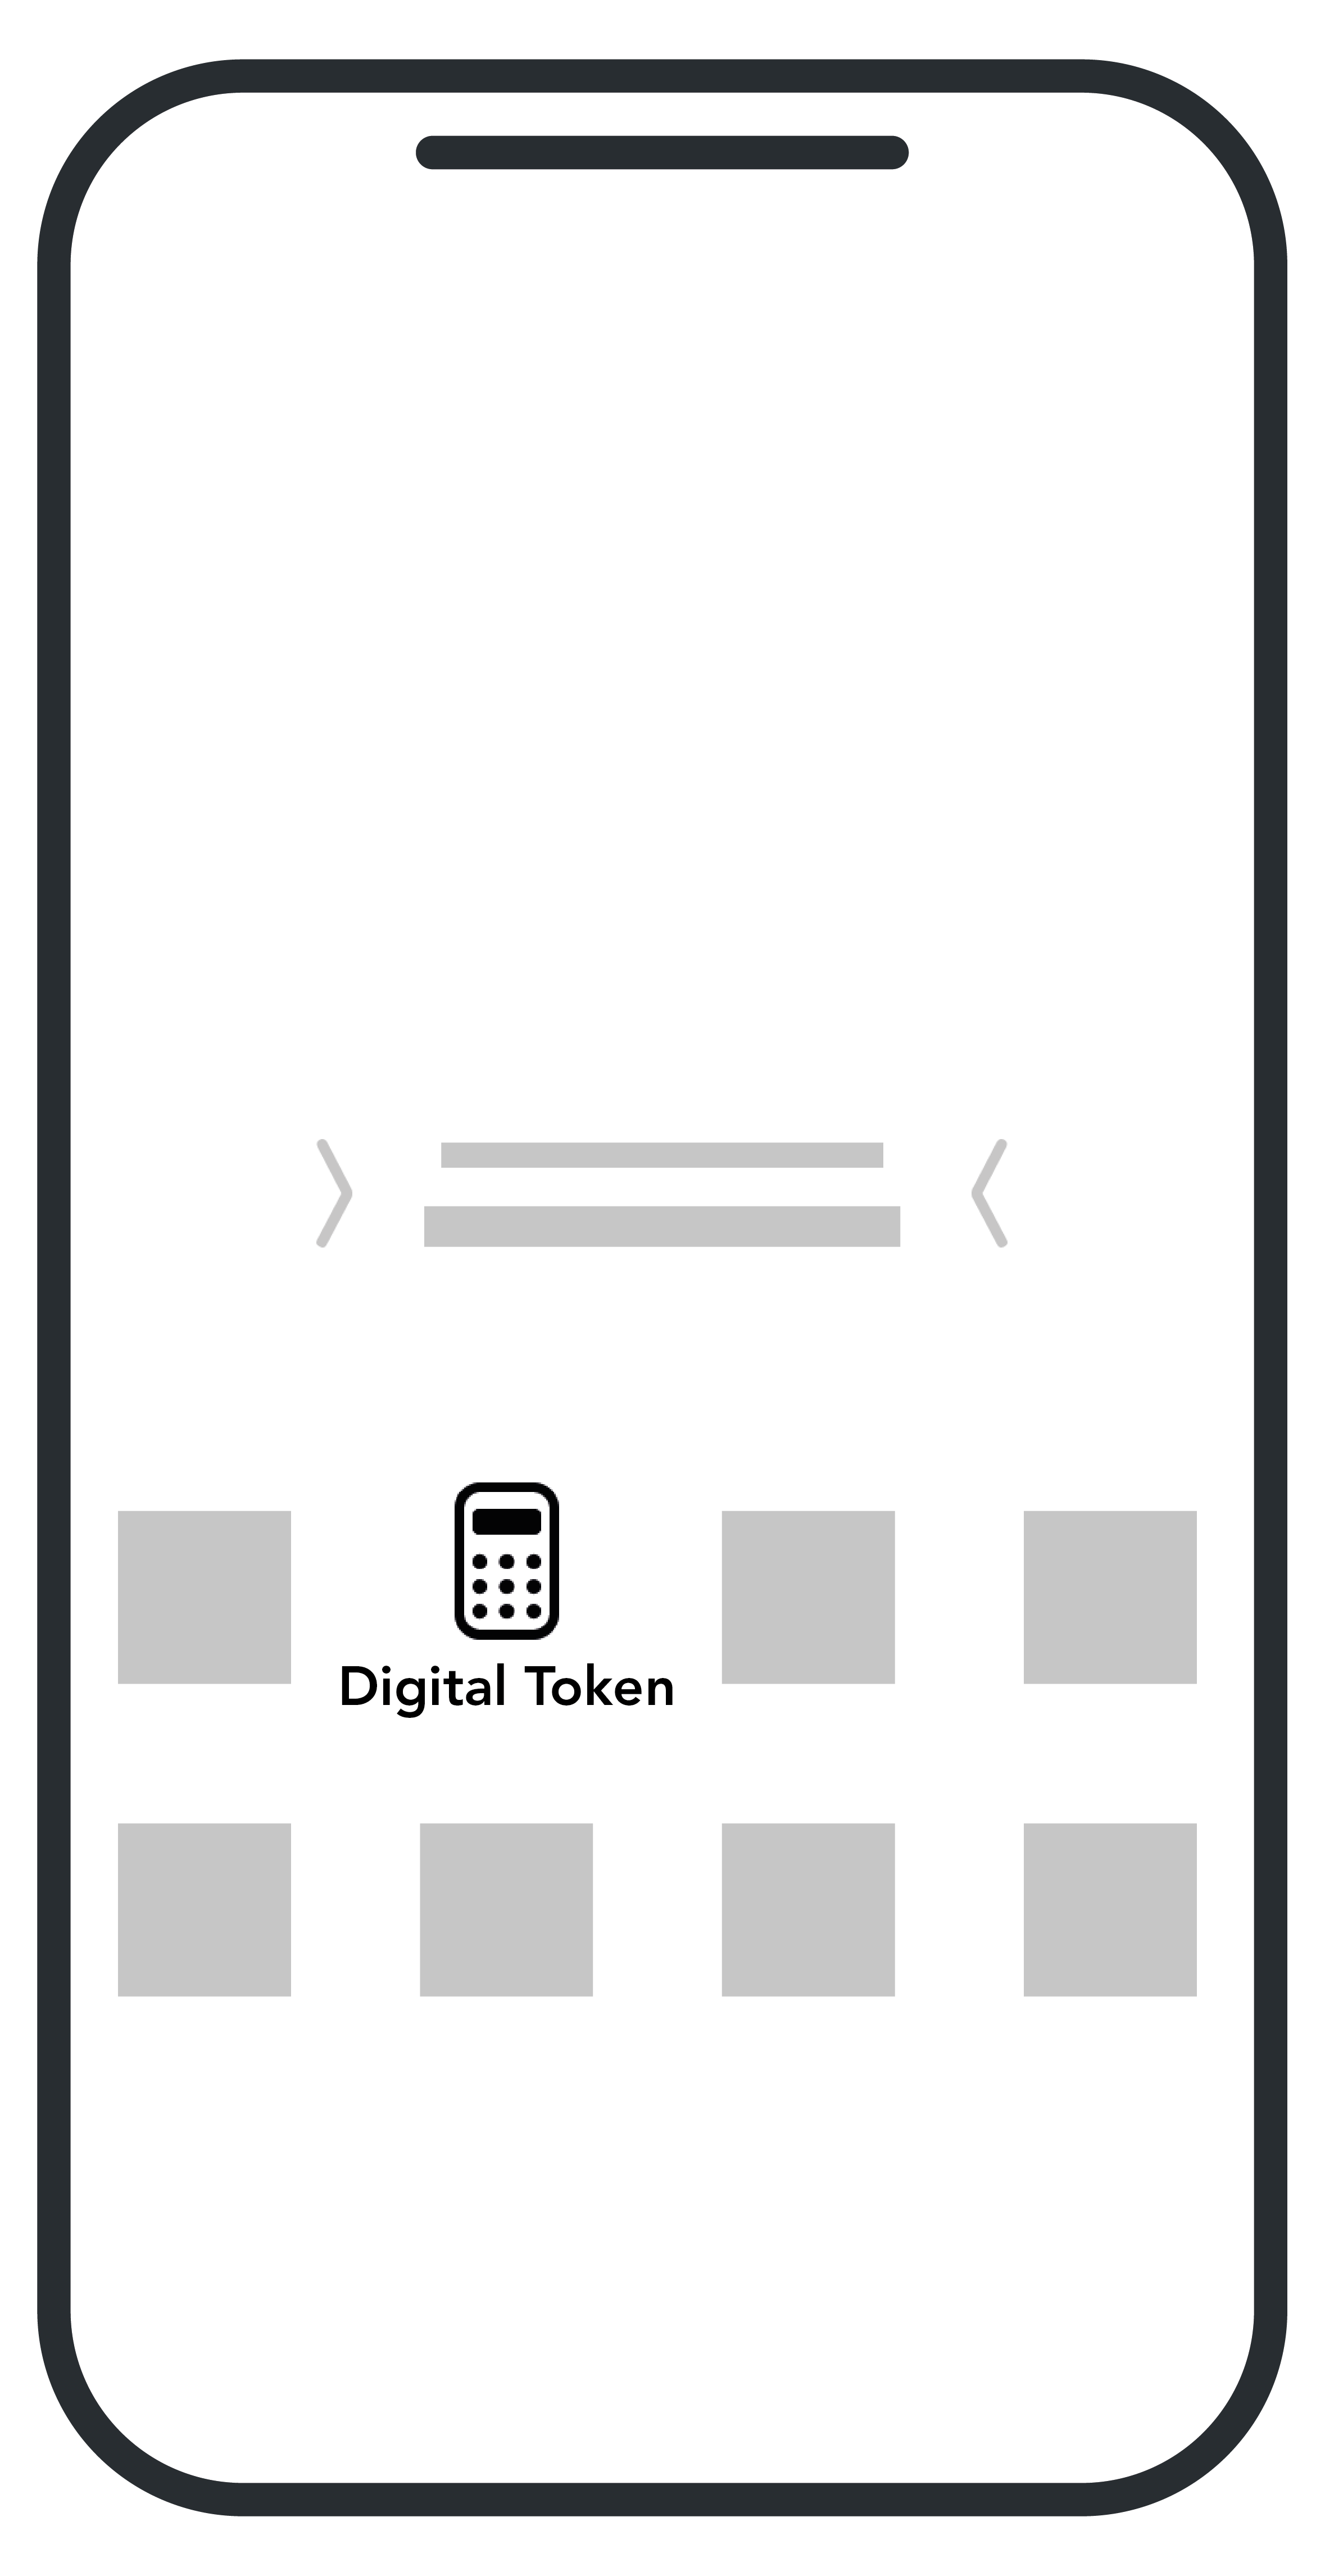 Digital Token - Manage my Digital Token